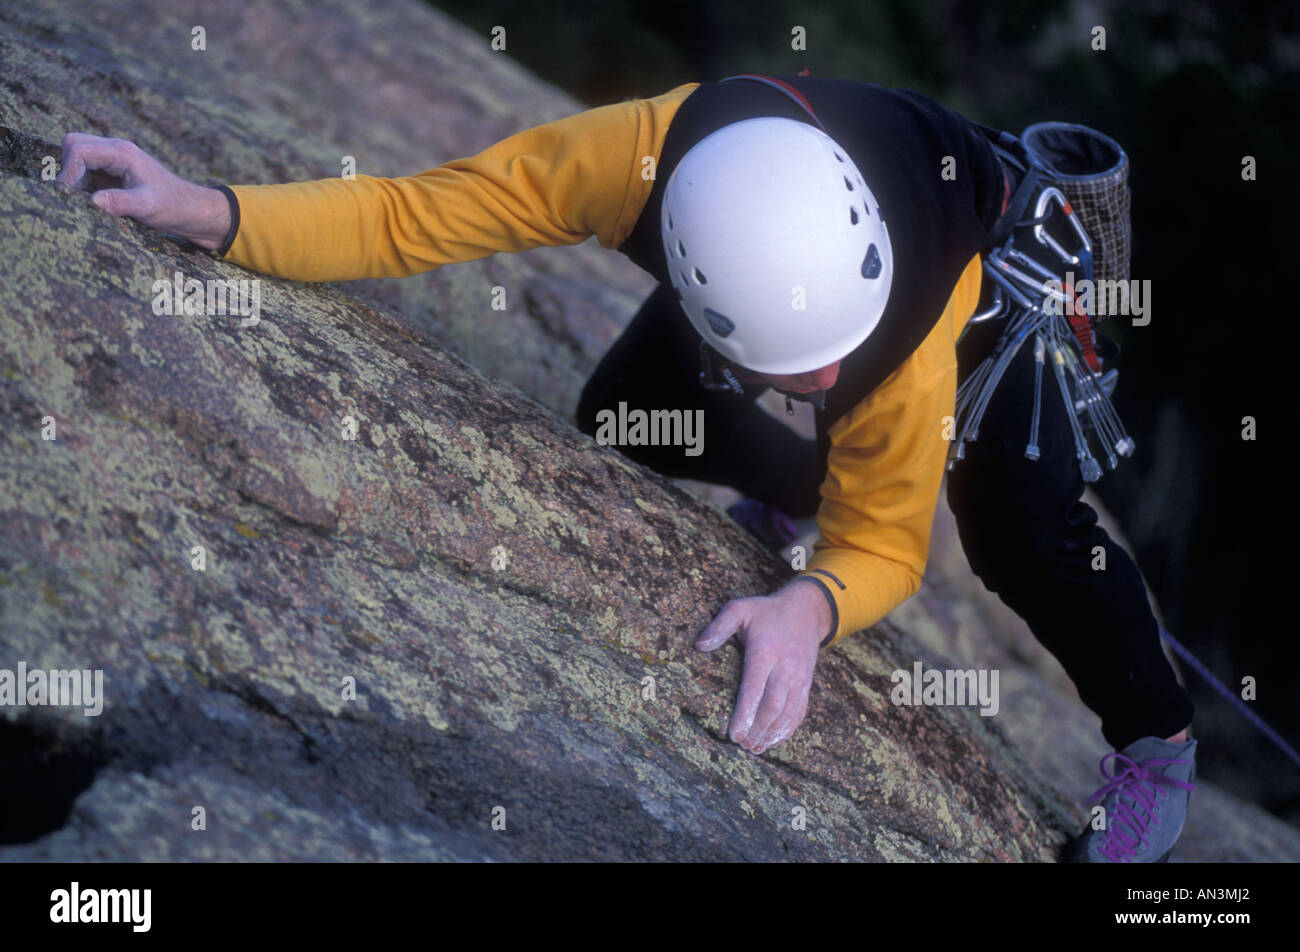 Rock climber ascending a steep rock face Banque D'Images